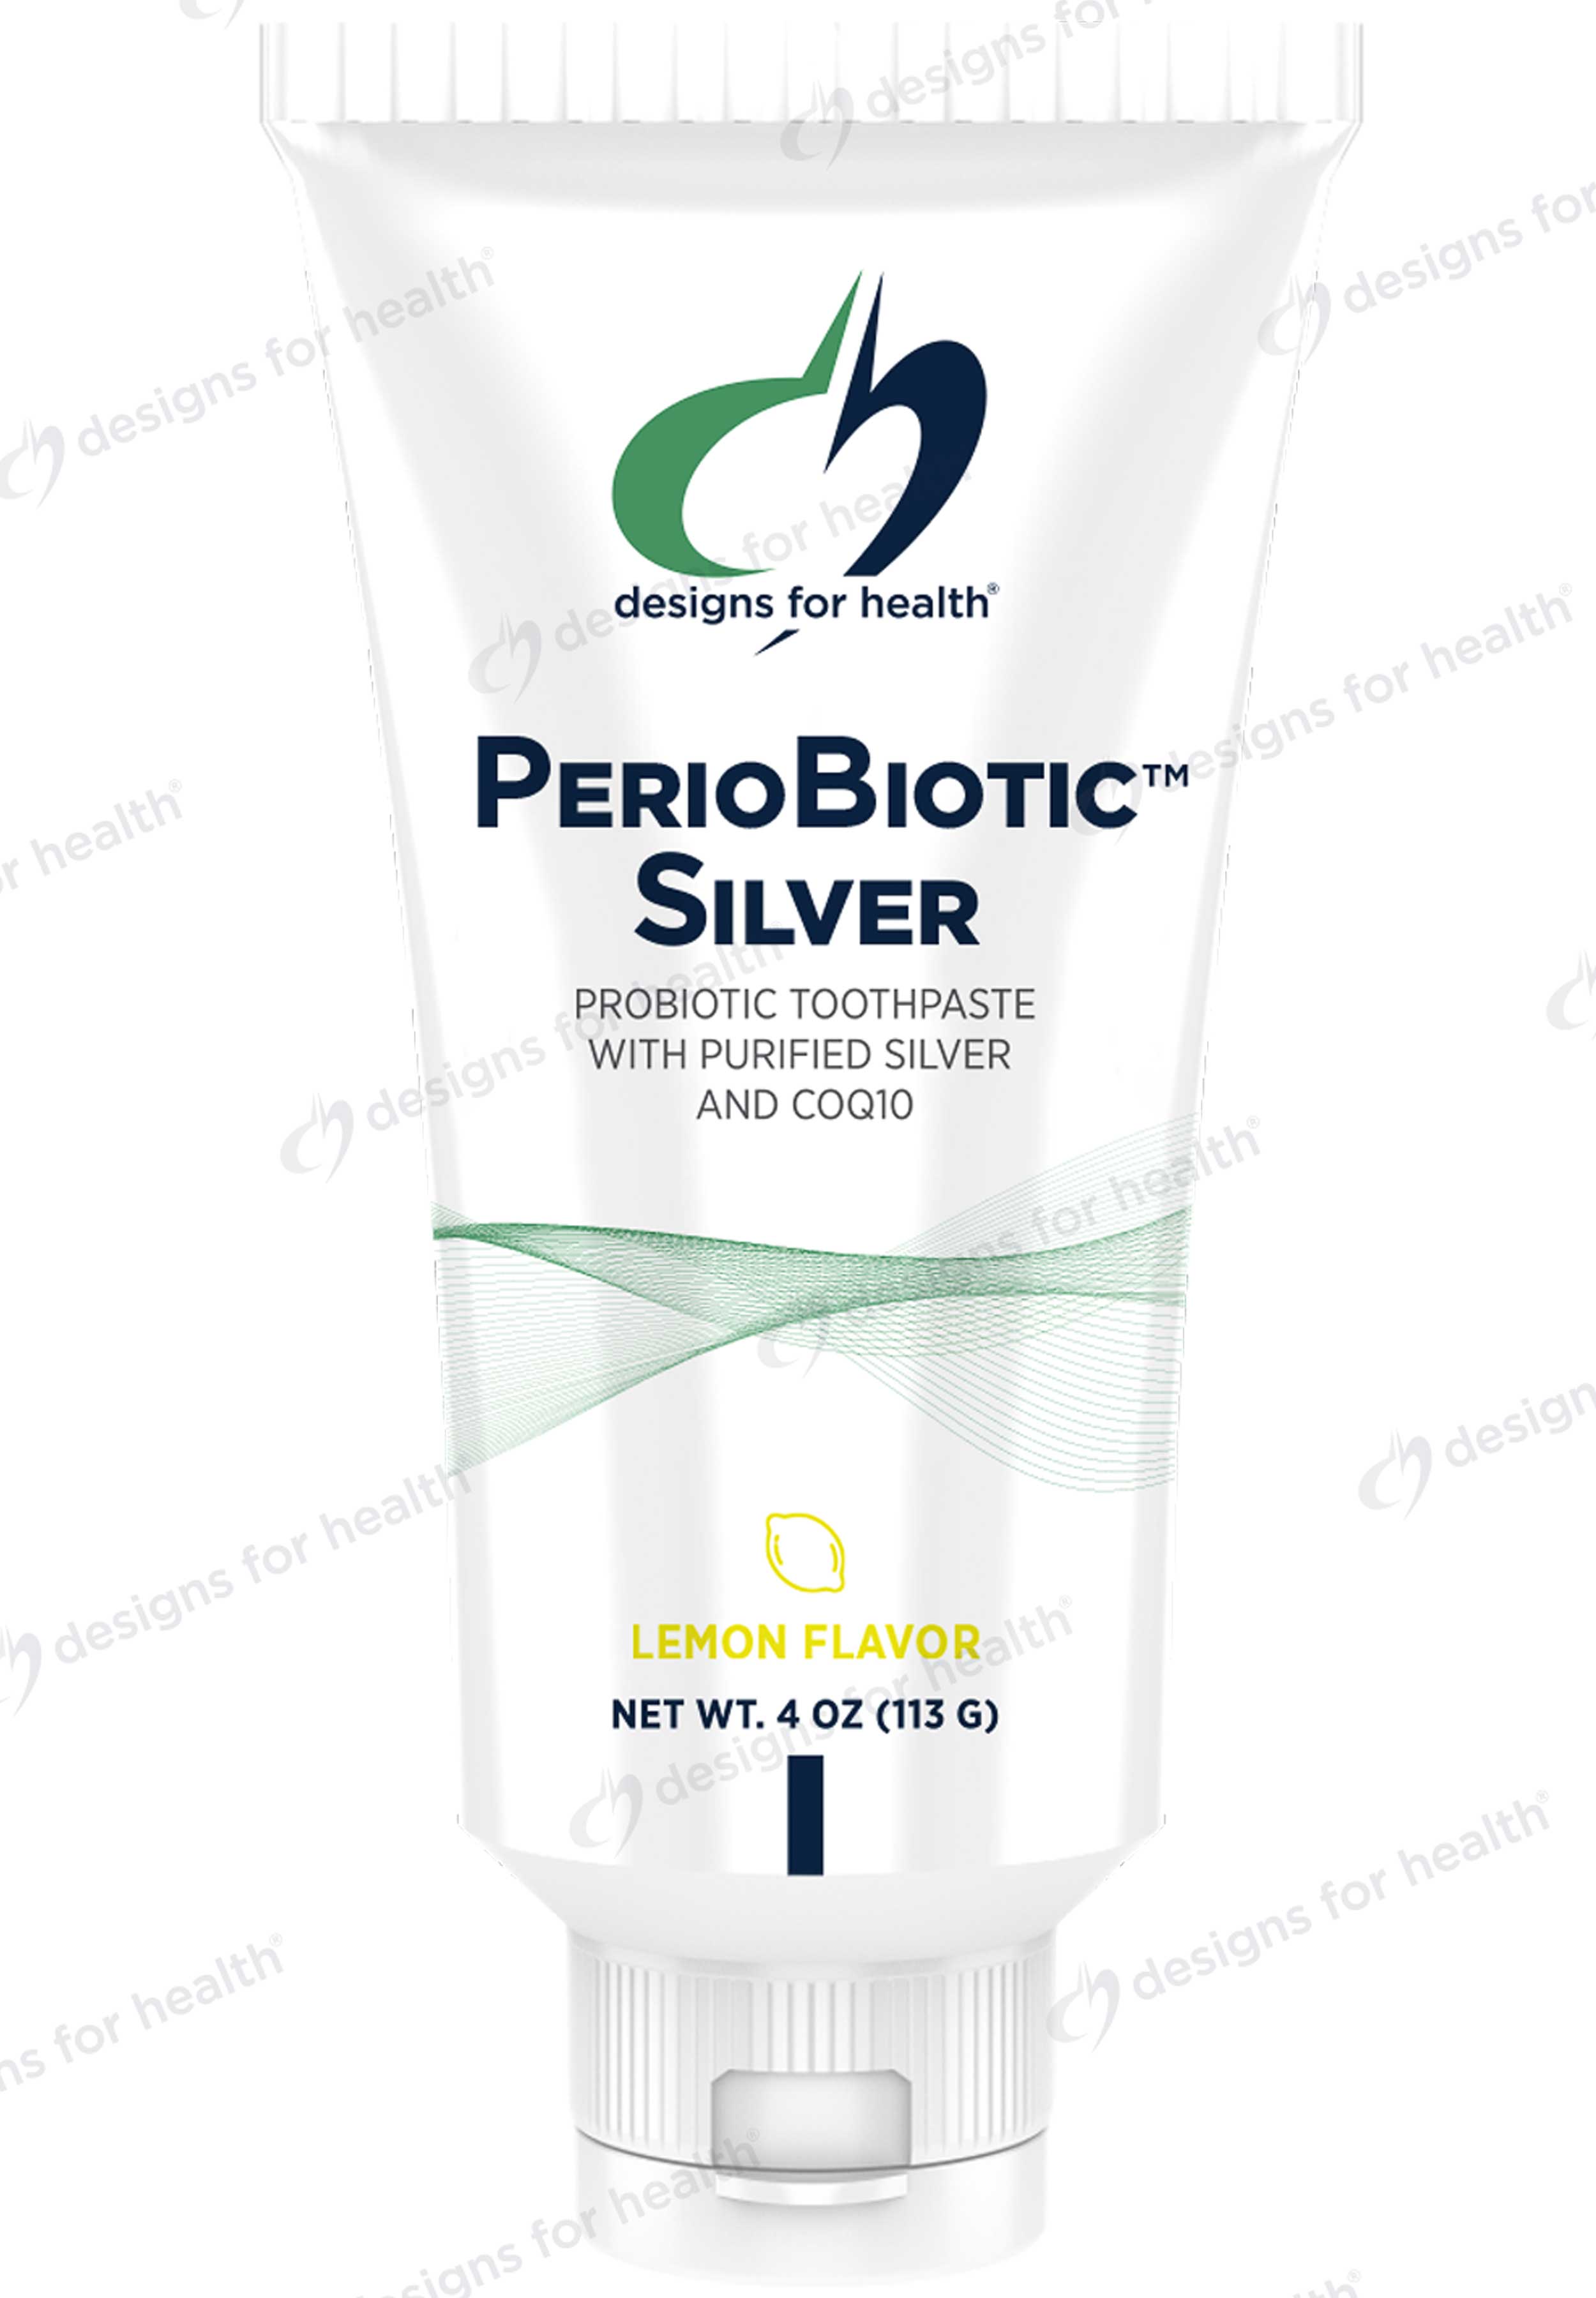 Designs for Health PerioBiotic Silver (Probiotic Toothpaste)